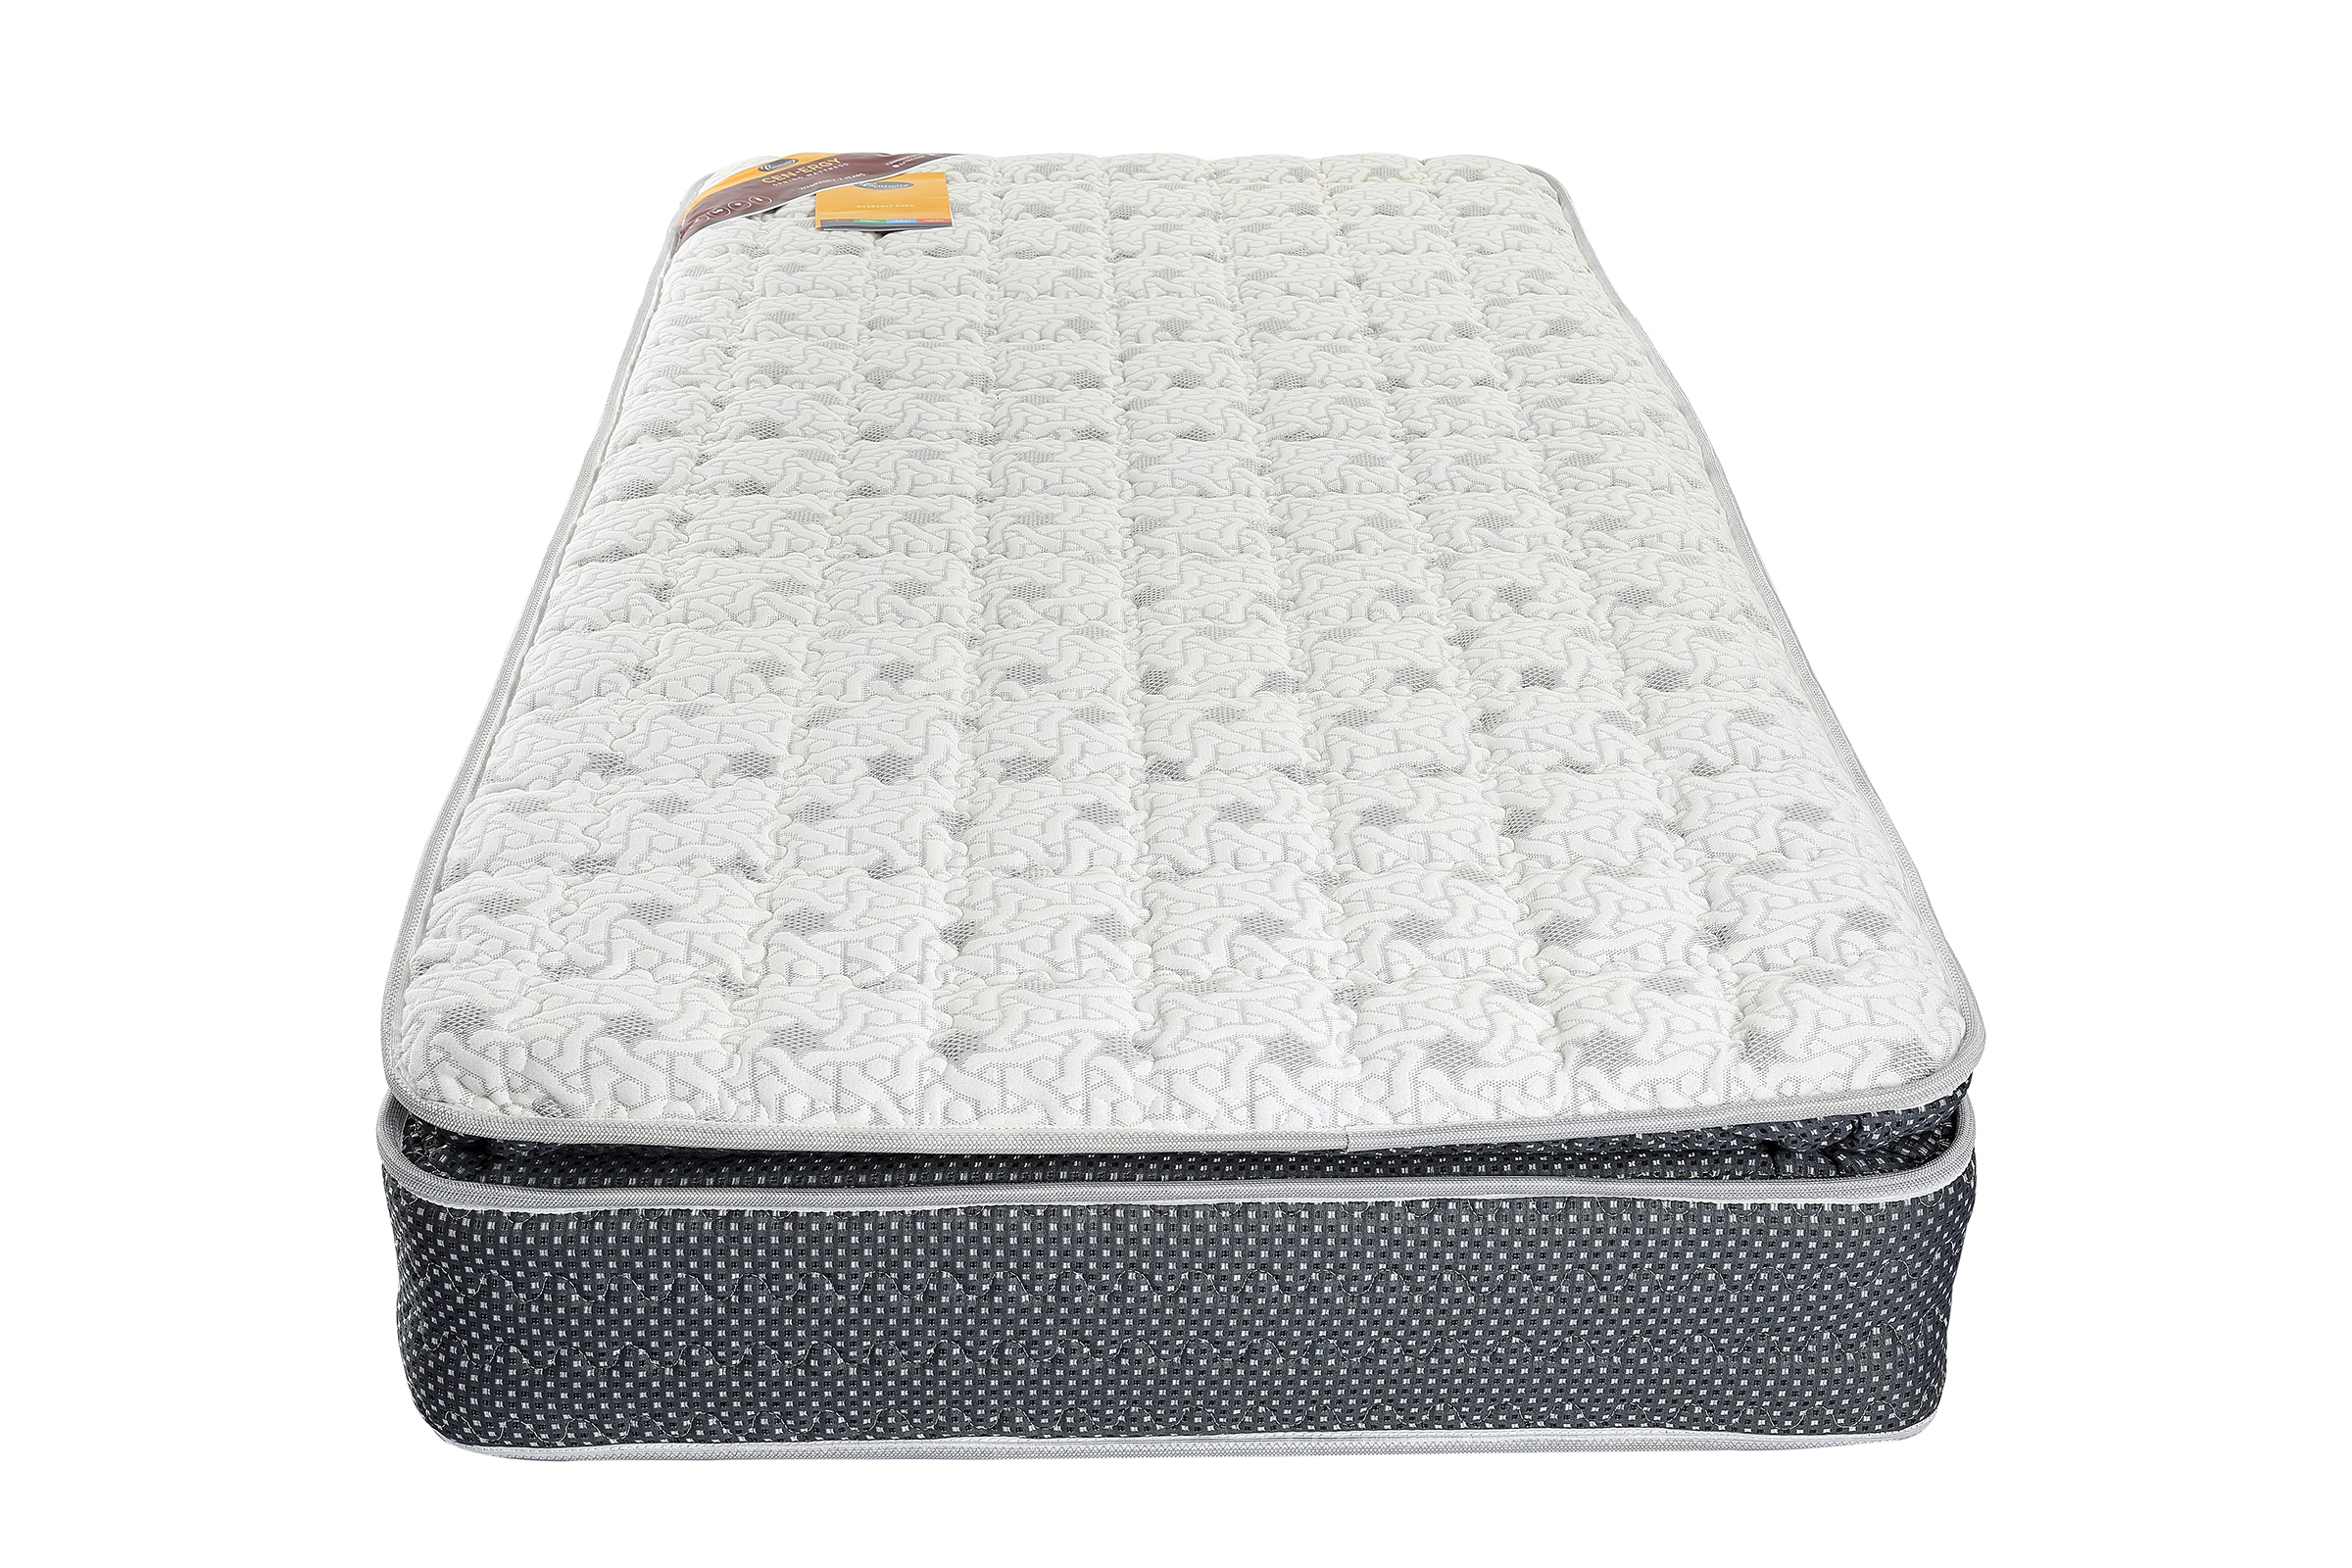 centuary mattress pocket spring